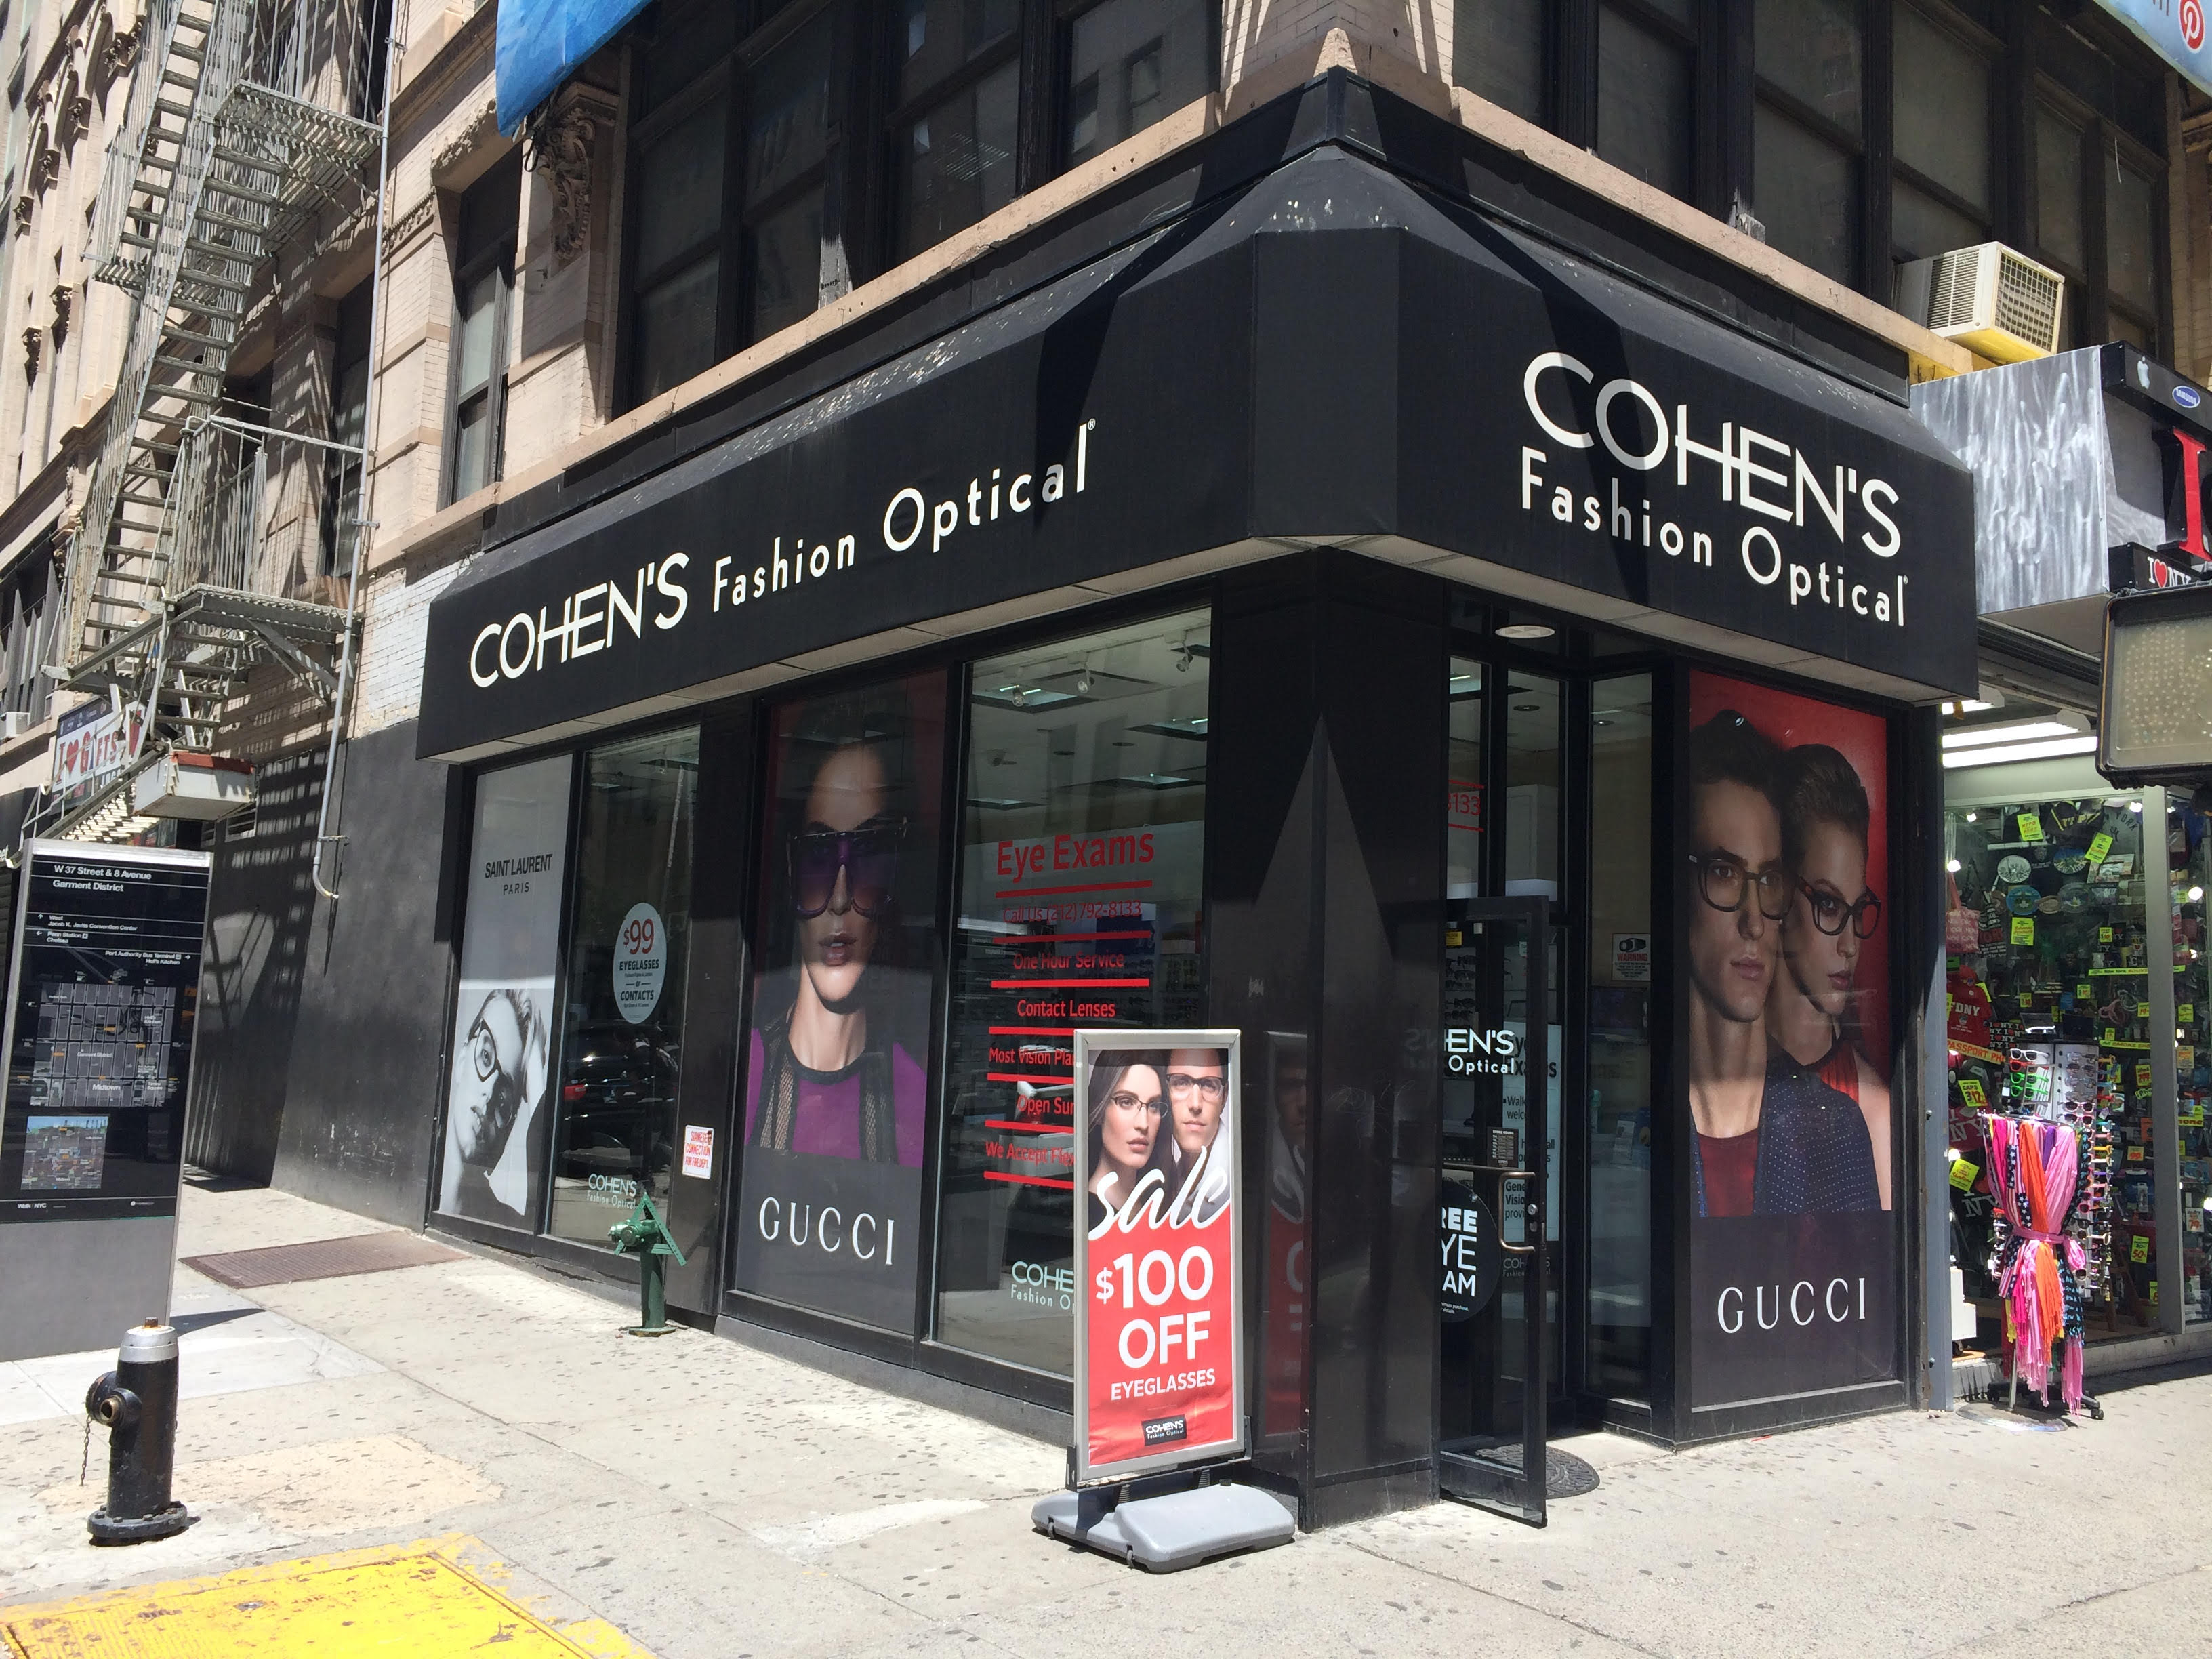 Cohen's Fashion Optical Photo